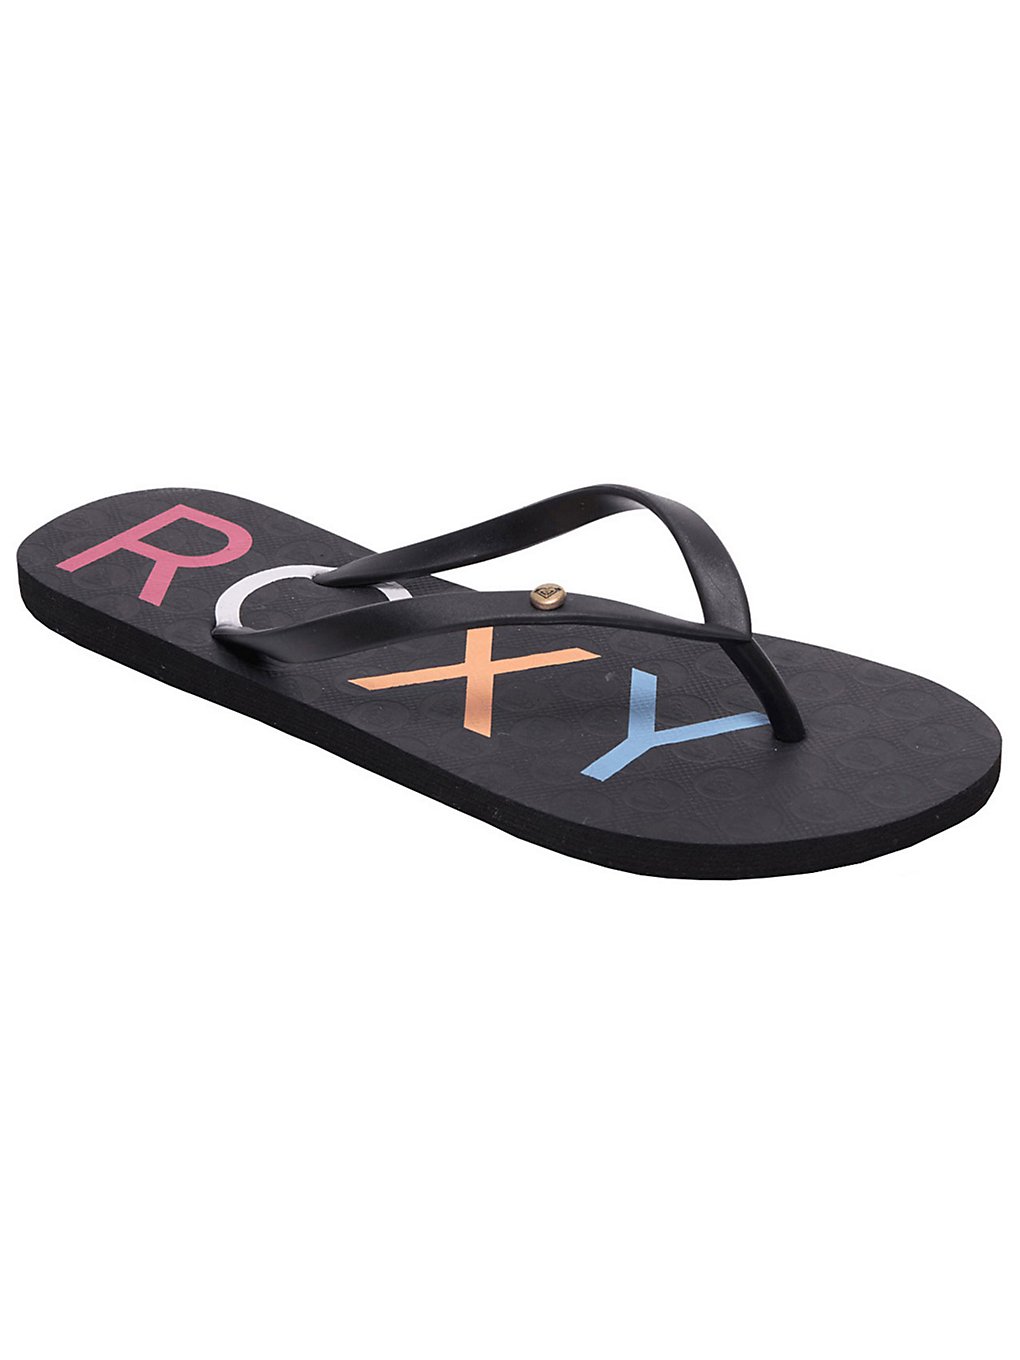 Roxy Sandy Sandals black multi